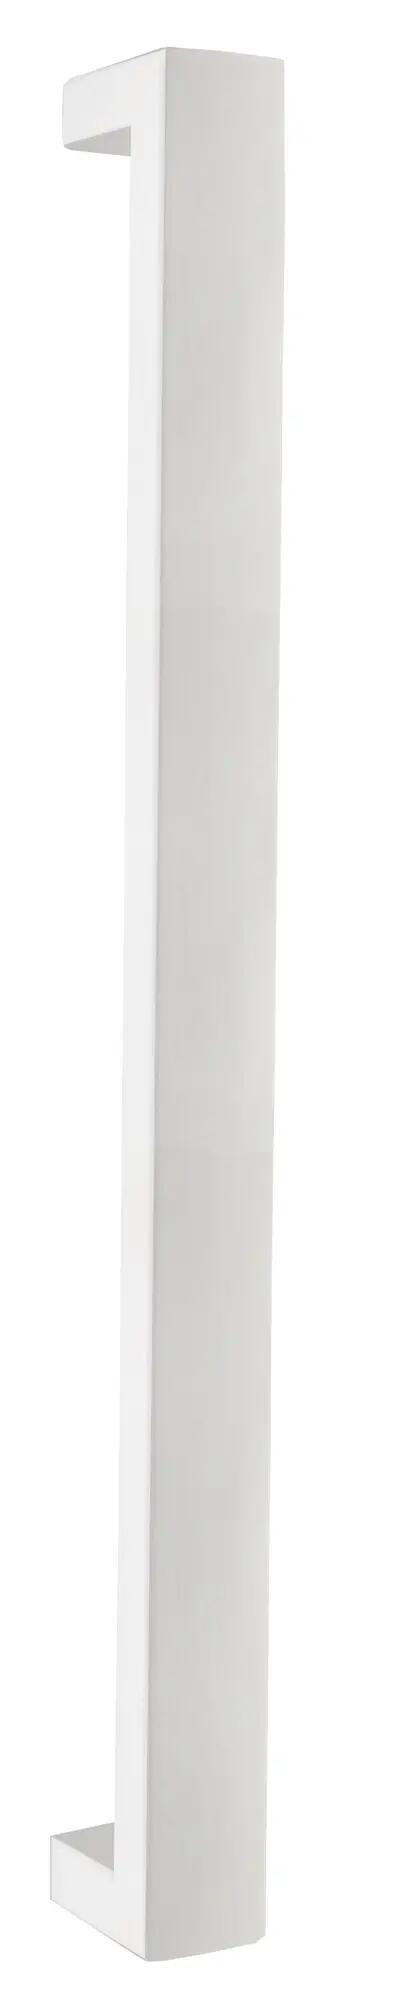 Manillón rectangular inox 800mm 798mm epoxi blanco